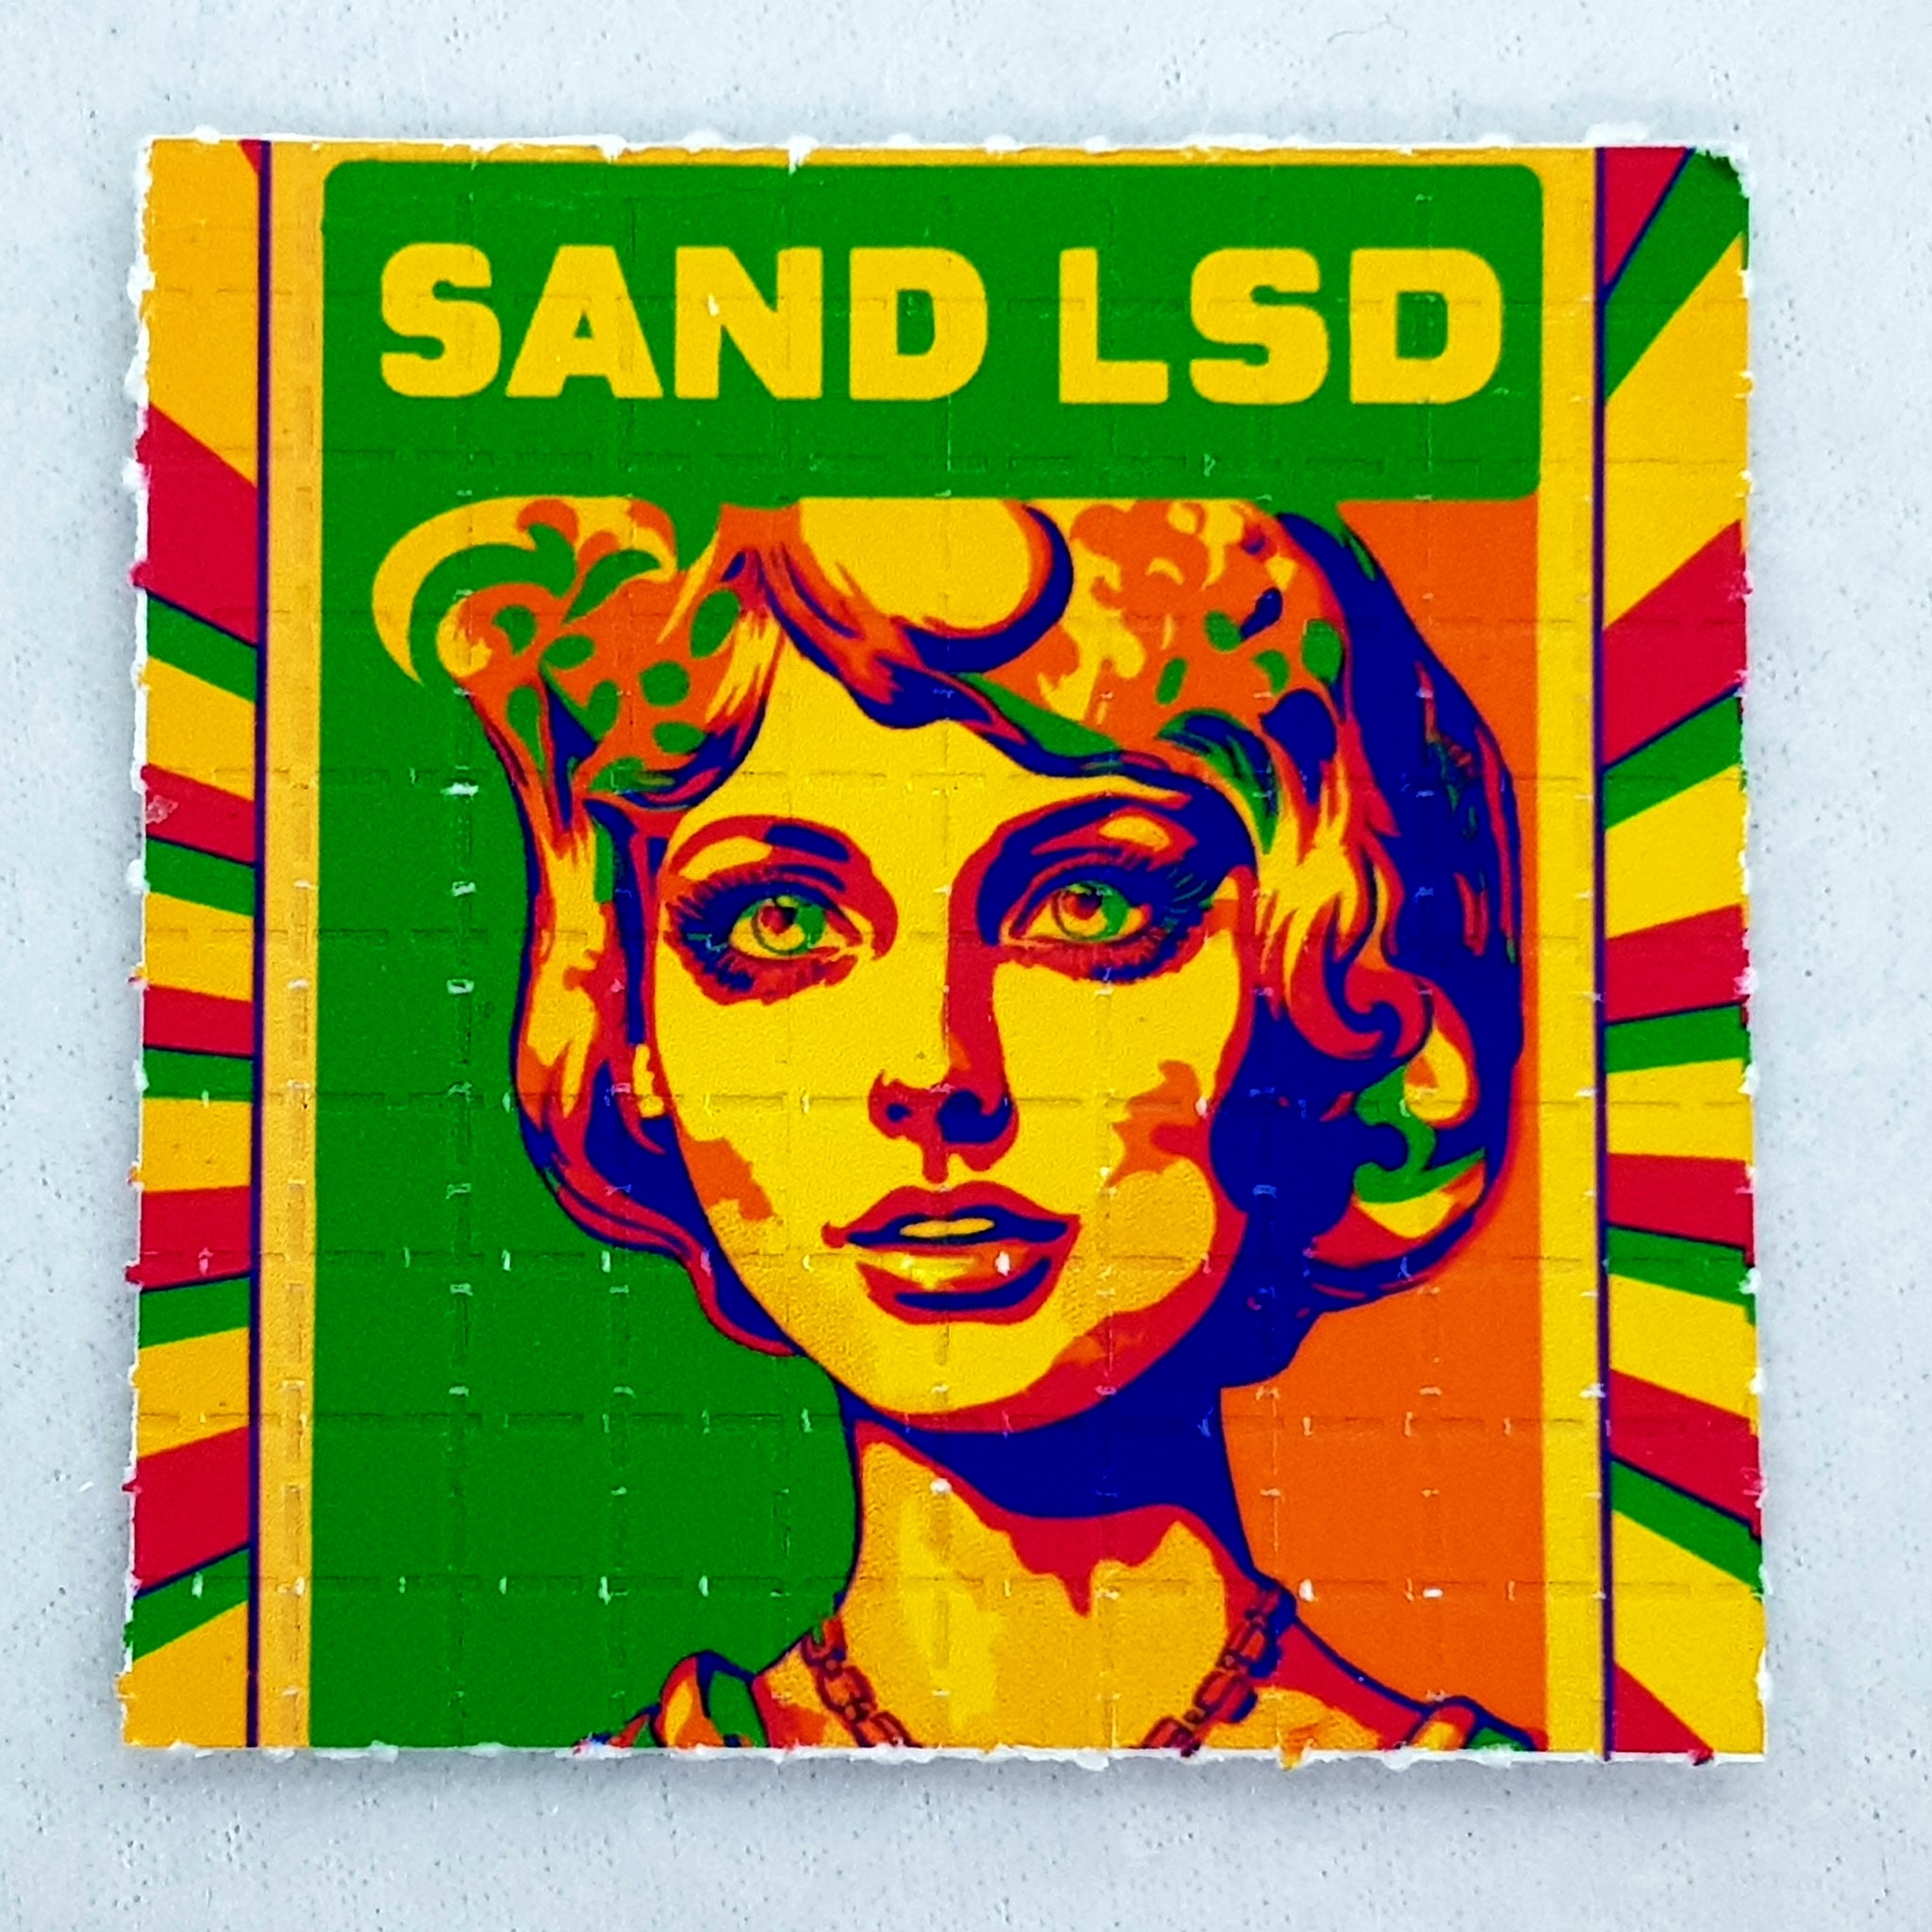 Nicholas Sand LSD Blotter Art